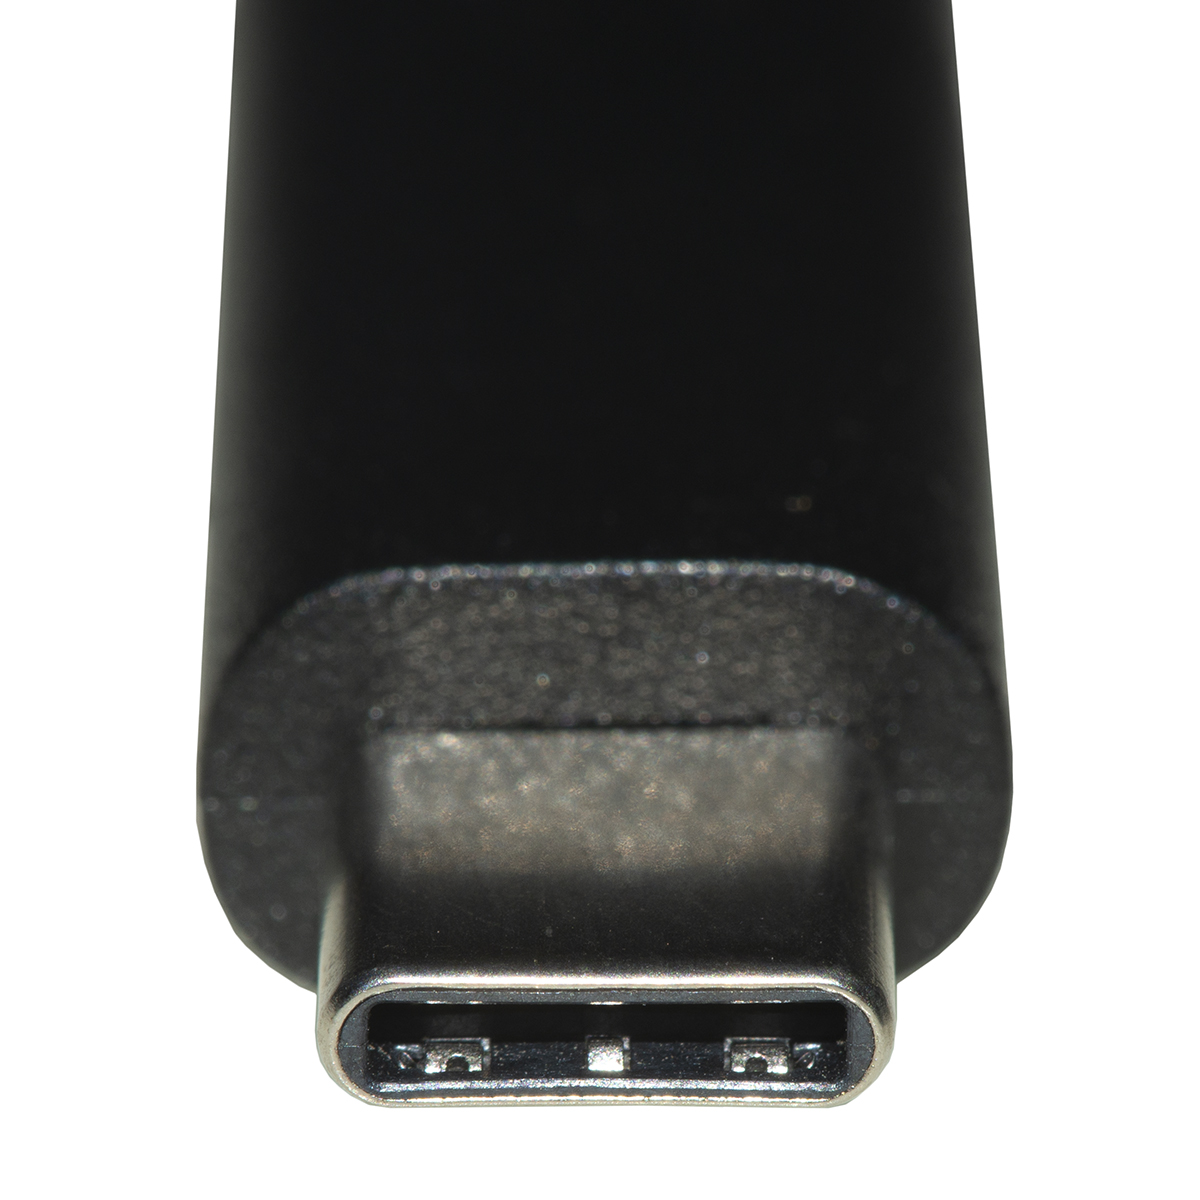 CAVO USB 2.0 USB-C® MASCHIO/MASCHIO MT 0,5 BIANCO